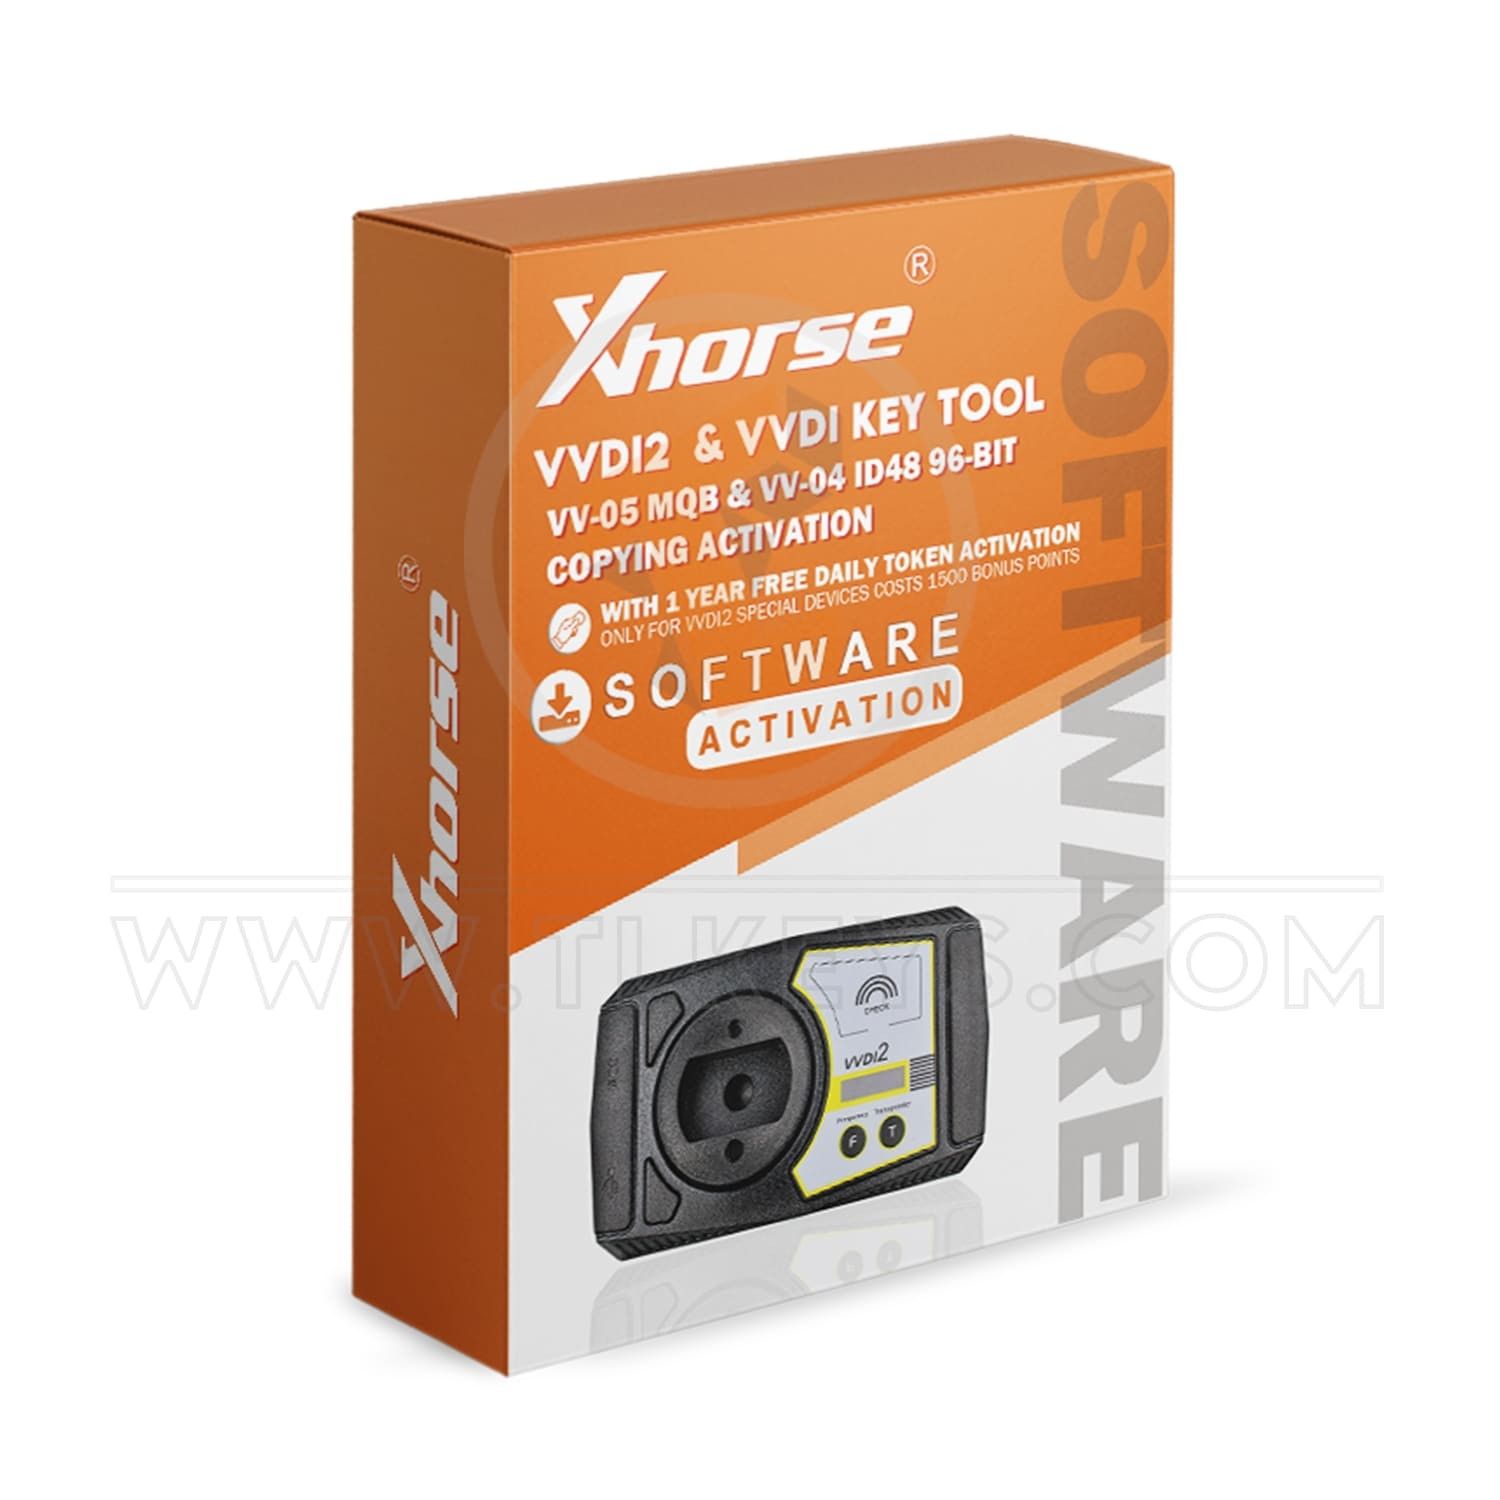 Xhorse VVDI2 VVDI Key Tool VV-05 MQB & VV-04 ID48 96-Bit software